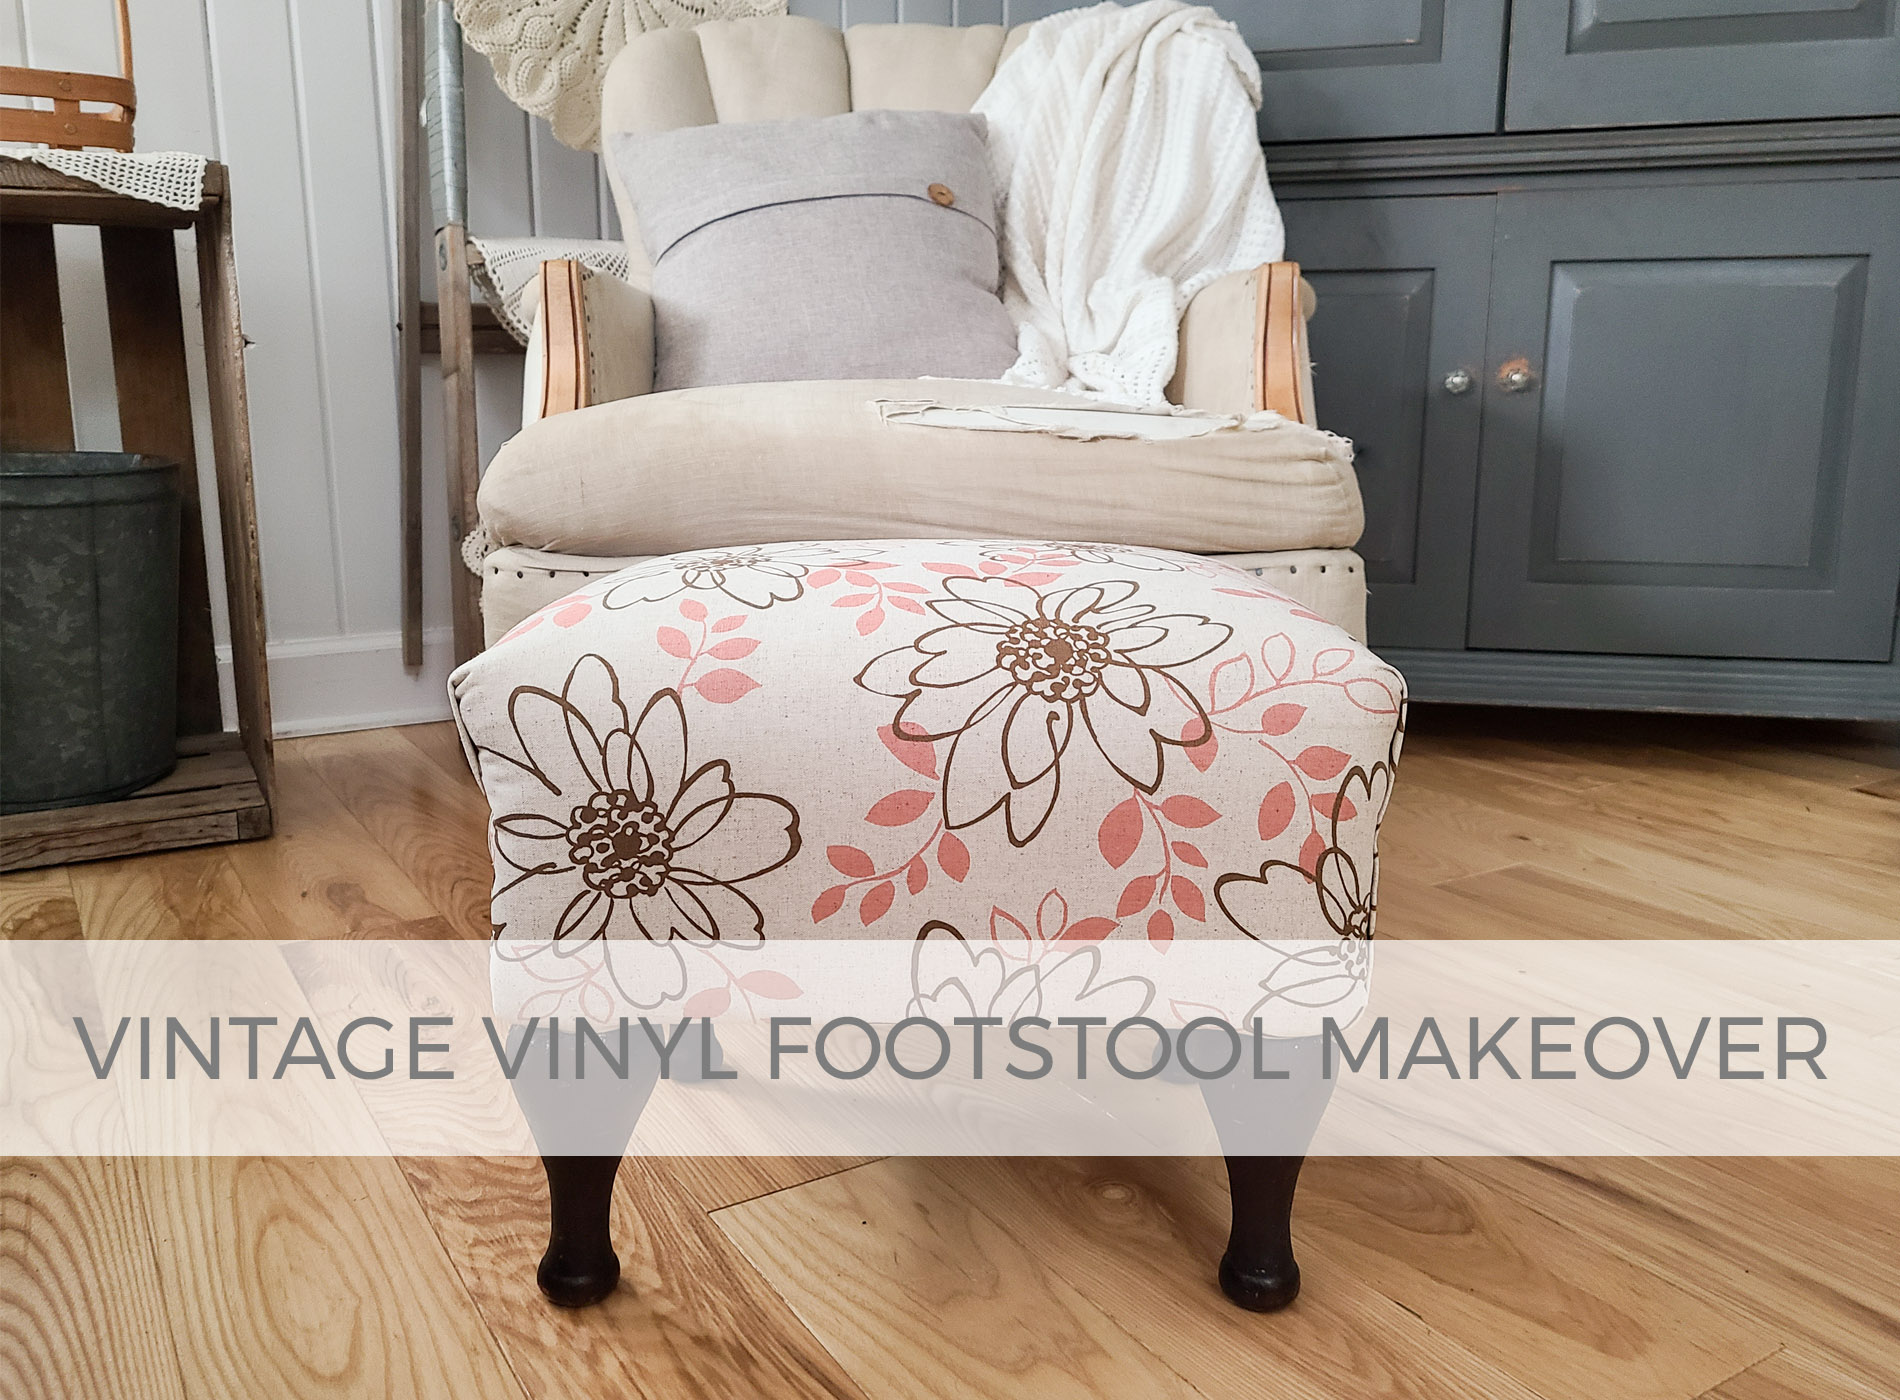 Vintage Vinyl Footstool Makeover by Larissa of Prodigal Pieces | prodigalpieces.com #prodigalpieces #furniture